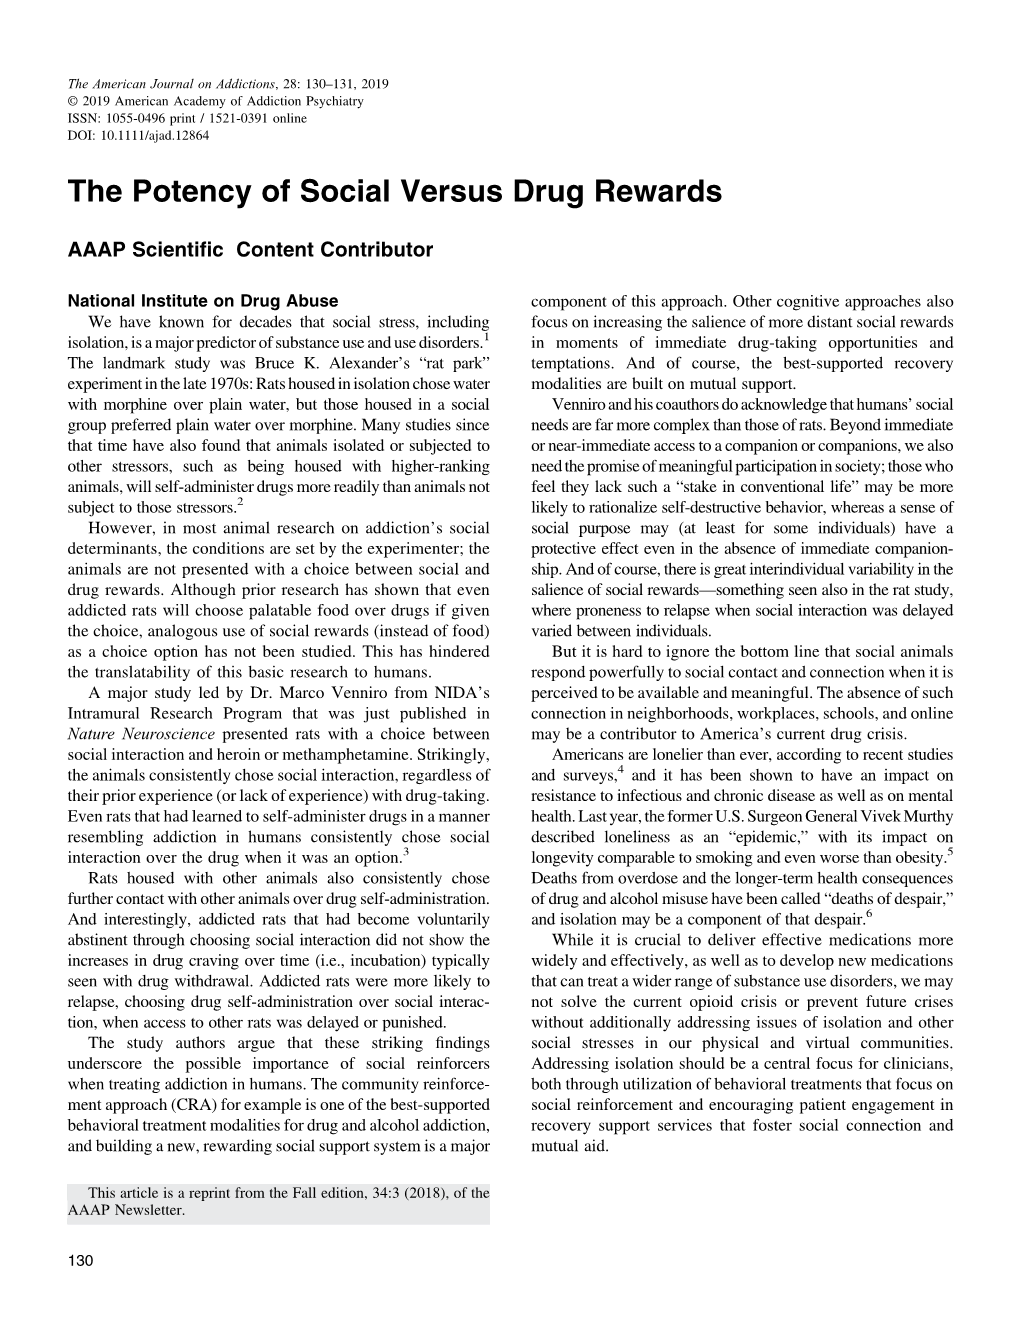 The Potency of Social Versus Drug Rewards